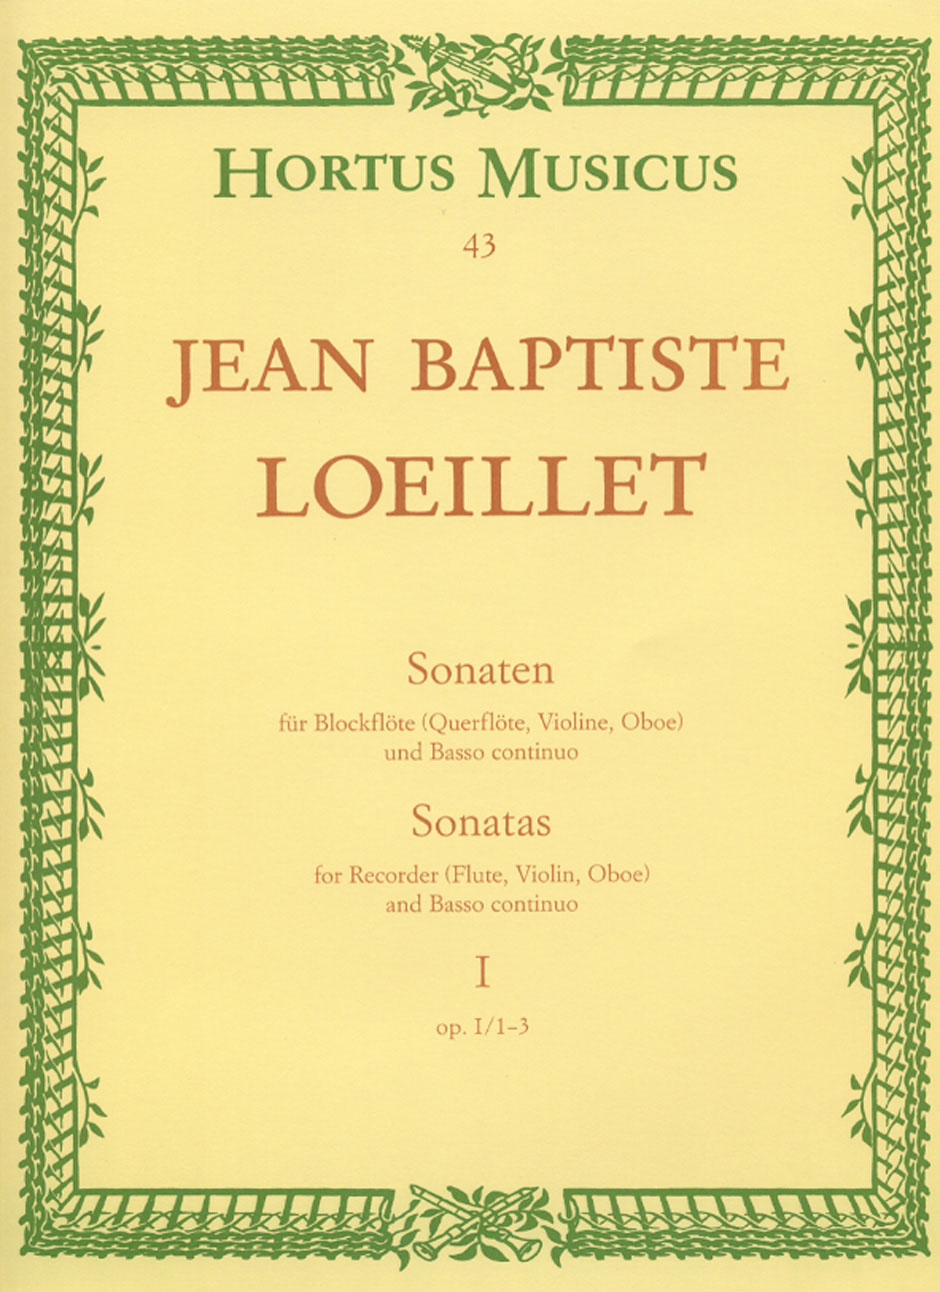 HORTUS MUSICUS LOEILLET DE GANT J.B. - SONATEN I OP. I/1-3 - FLB ET BC